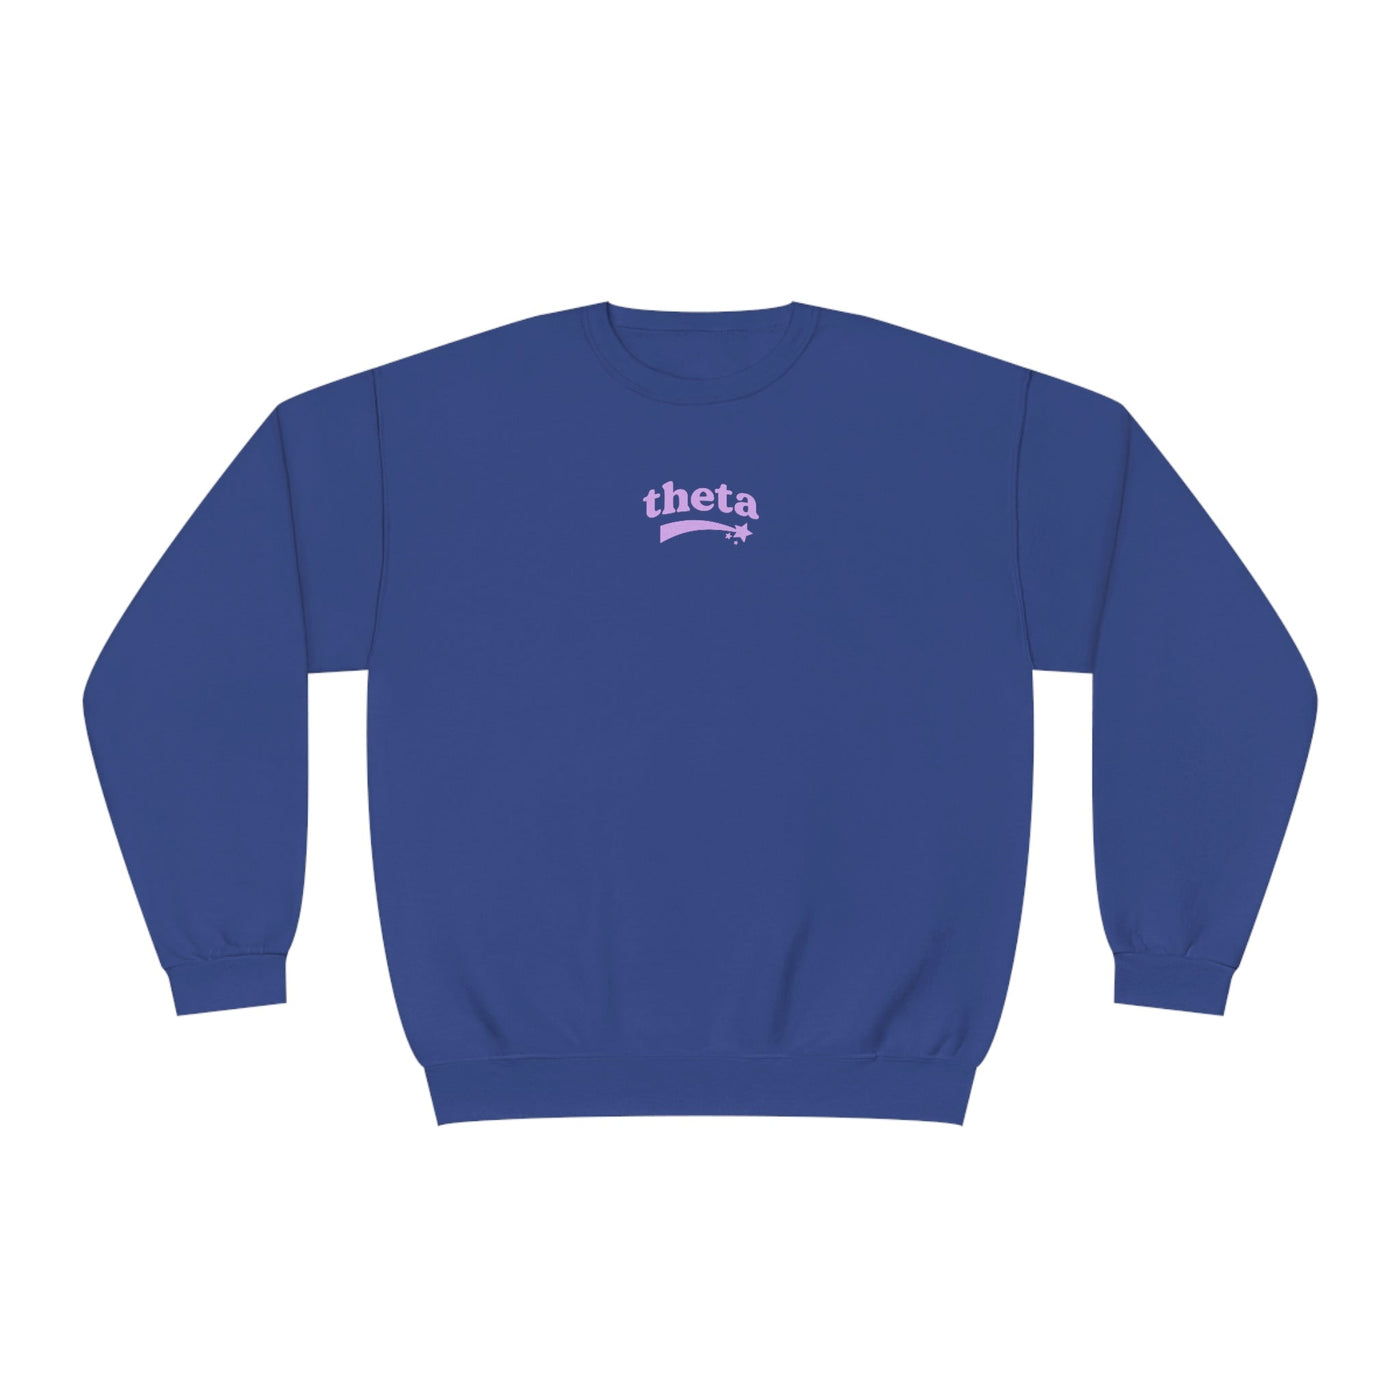 Kappa Alpha Theta Crewneck Sweatshirt | Be Kind to the Planet Trendy Sorority Crewneck